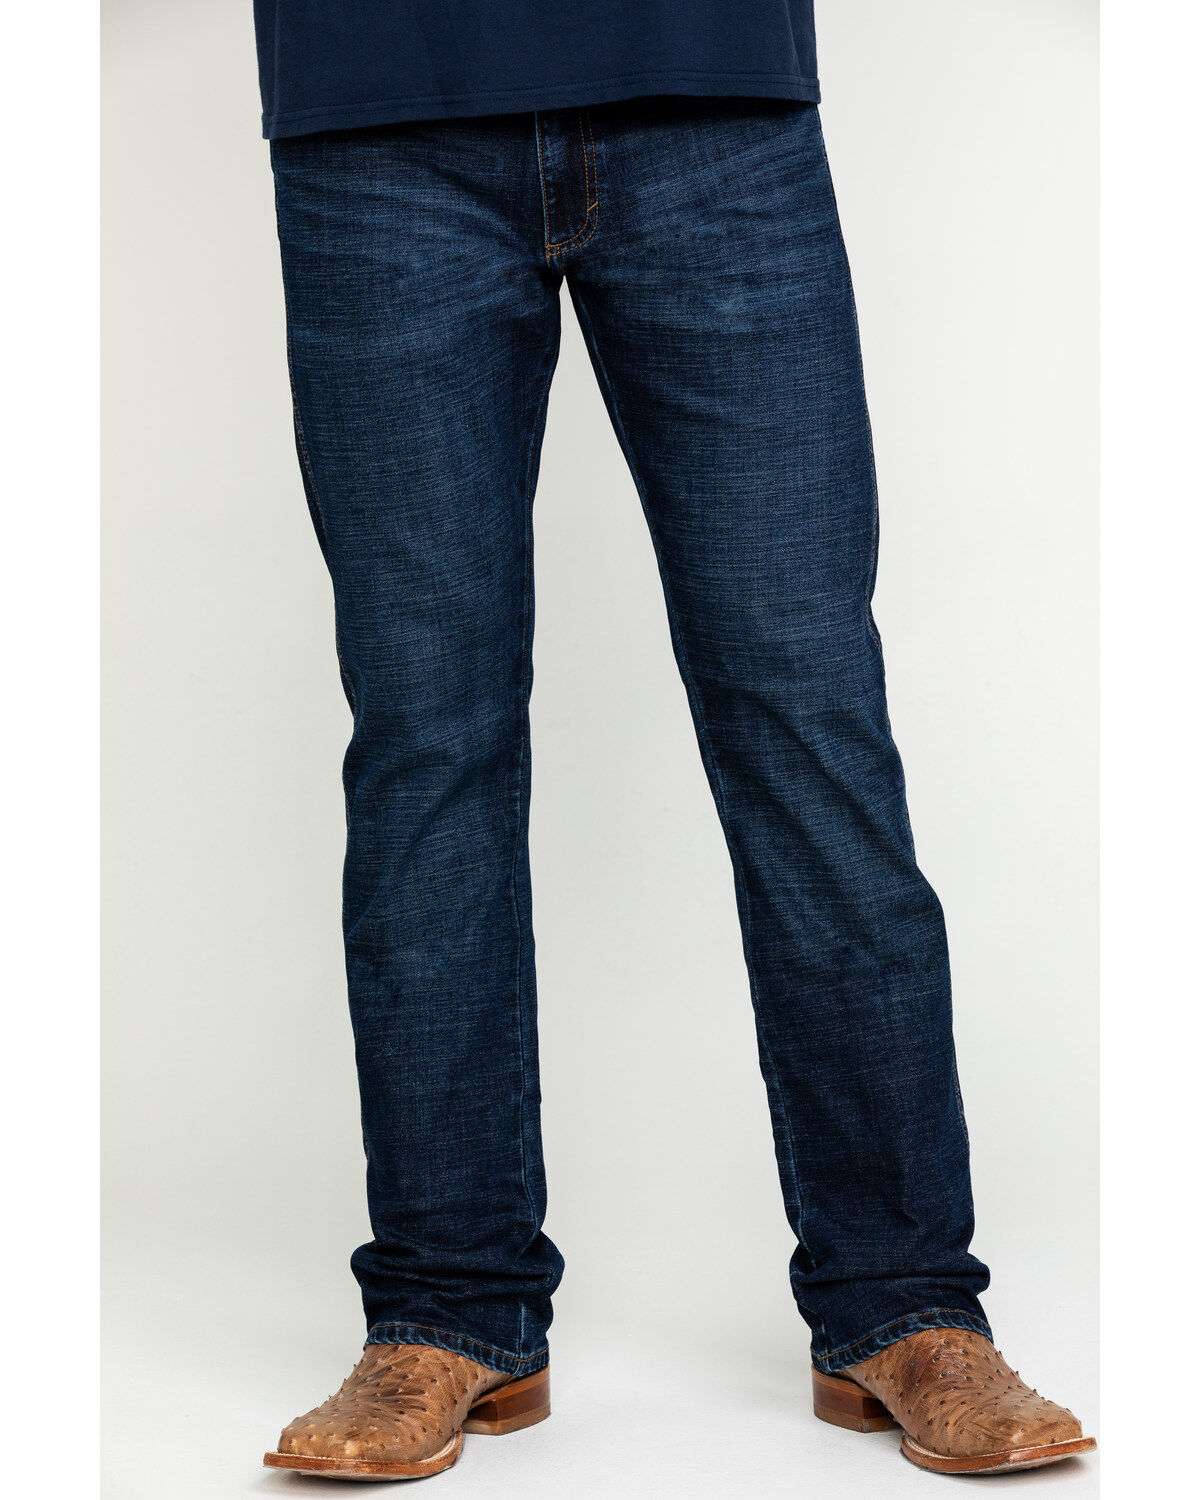 wrangler bryson jeans